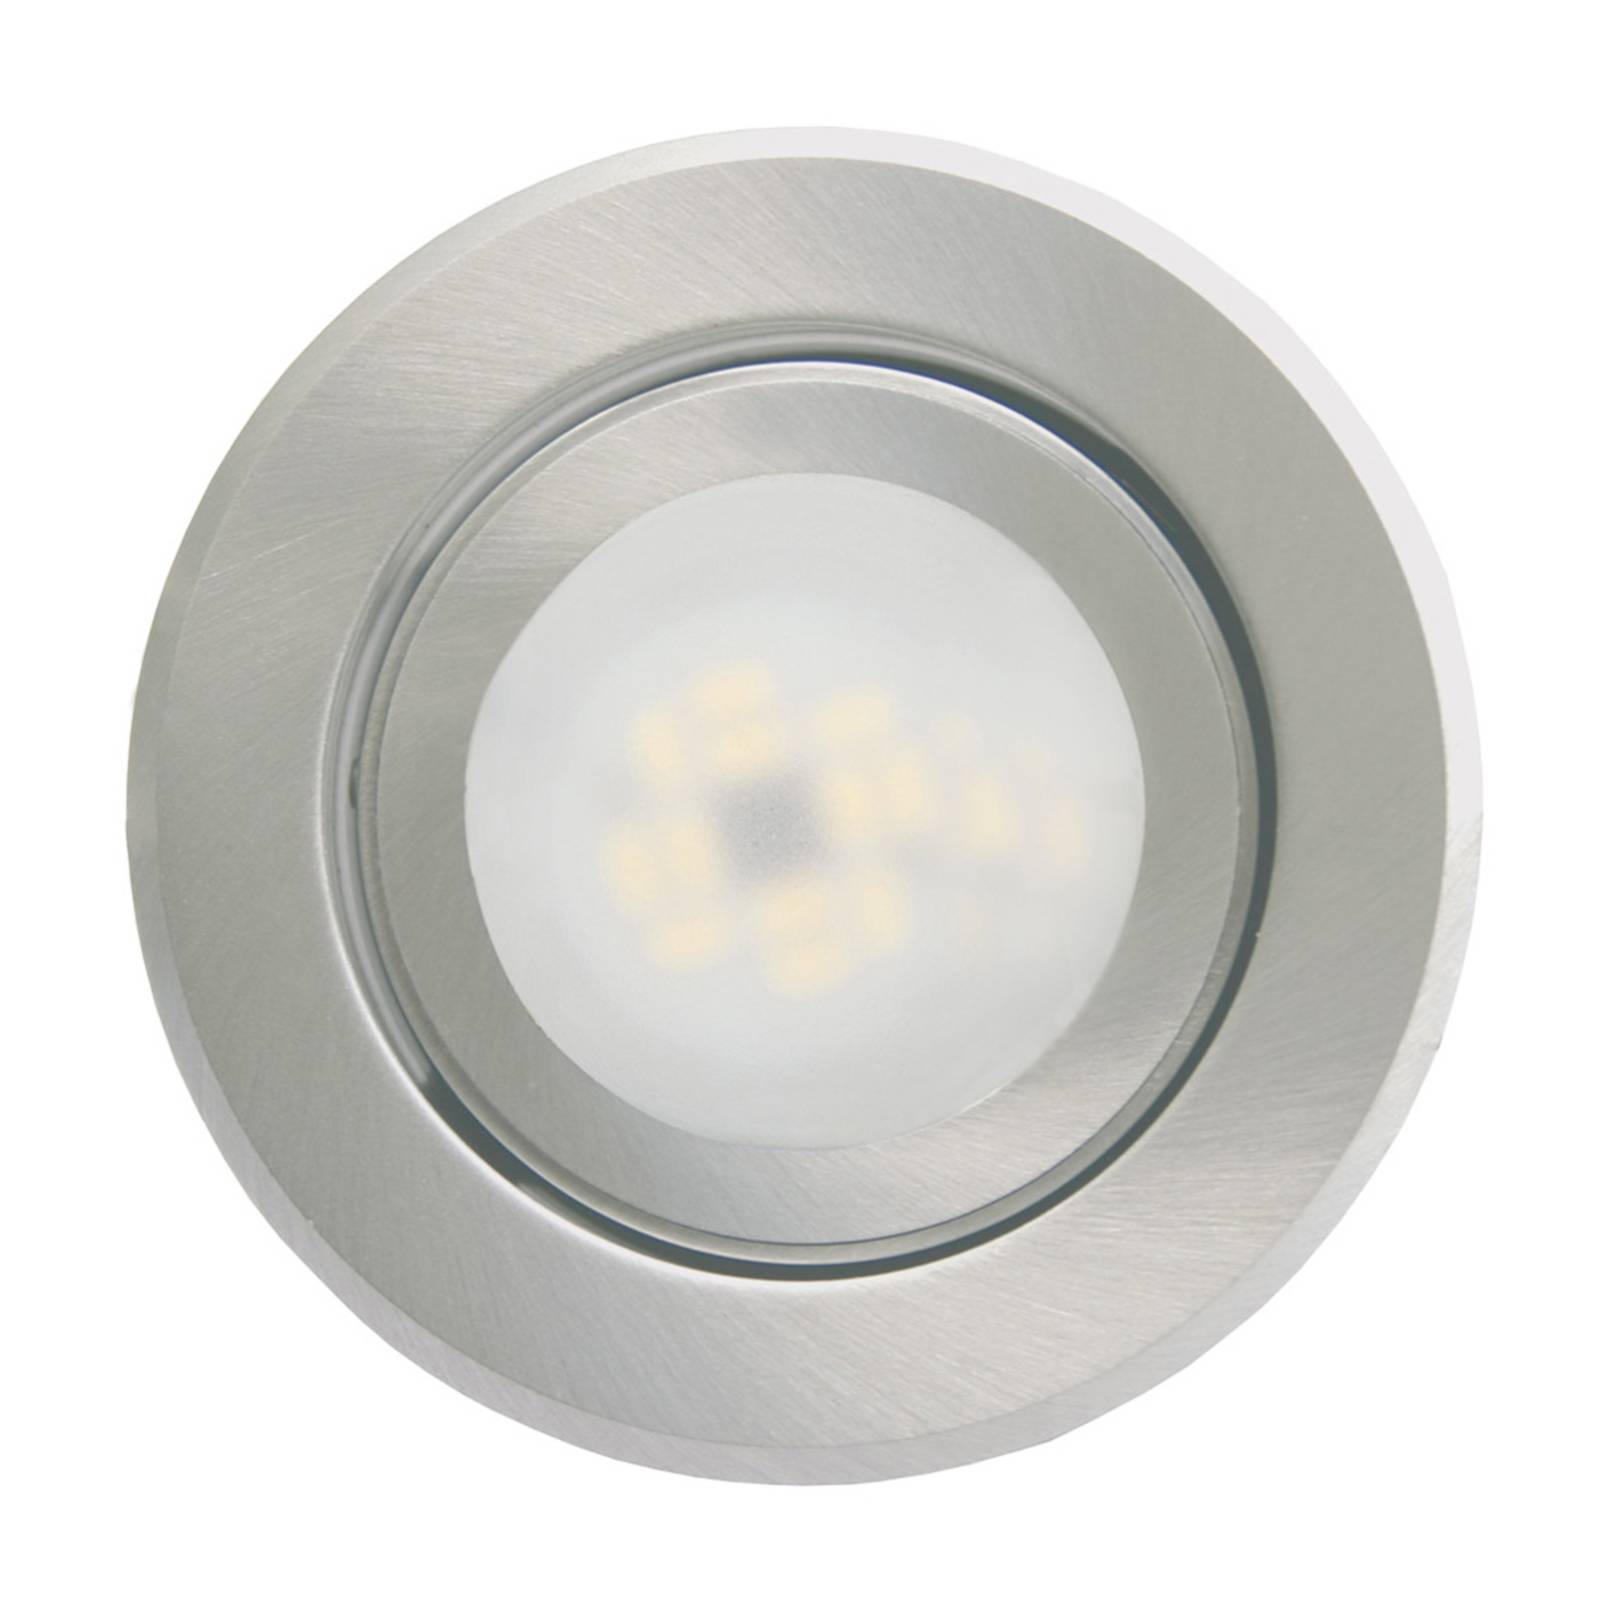 Image of Lampe encastrable Joanie LED, aluminium brossé 4019231038788